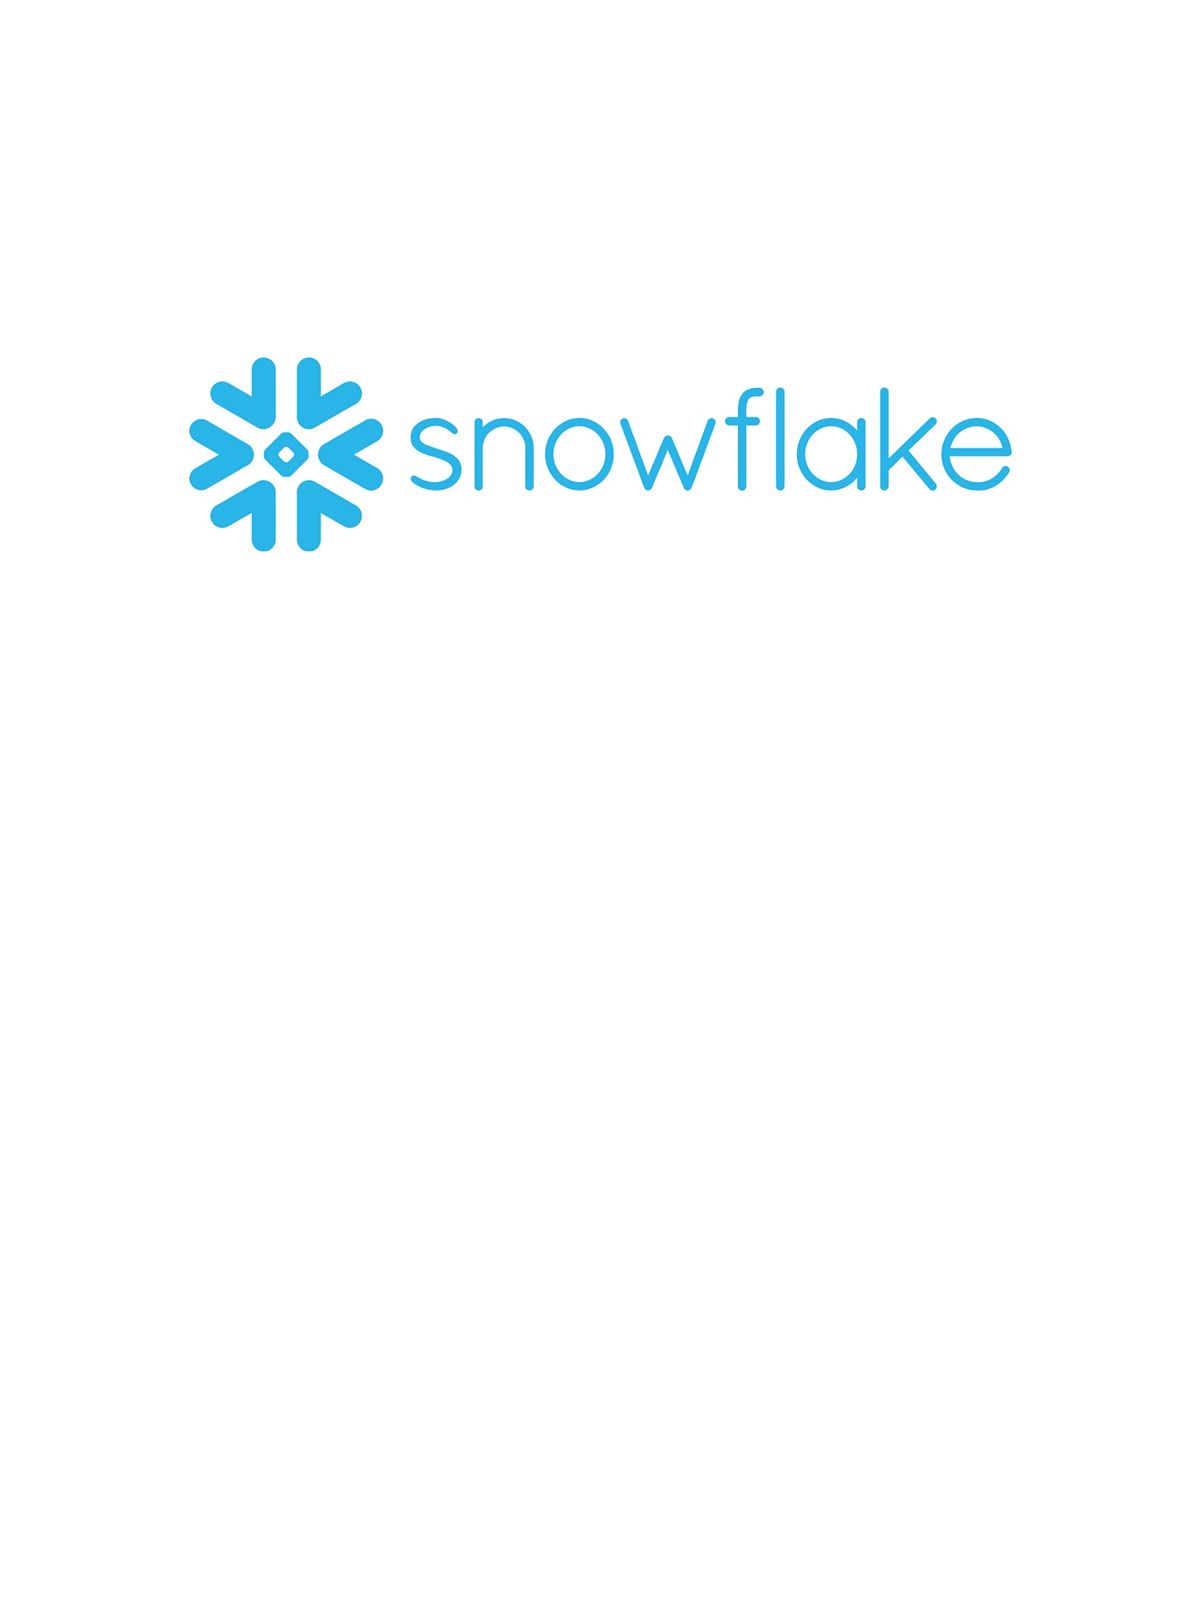 4 Weeks Snowflake cloud data platform Training Course Chantilly